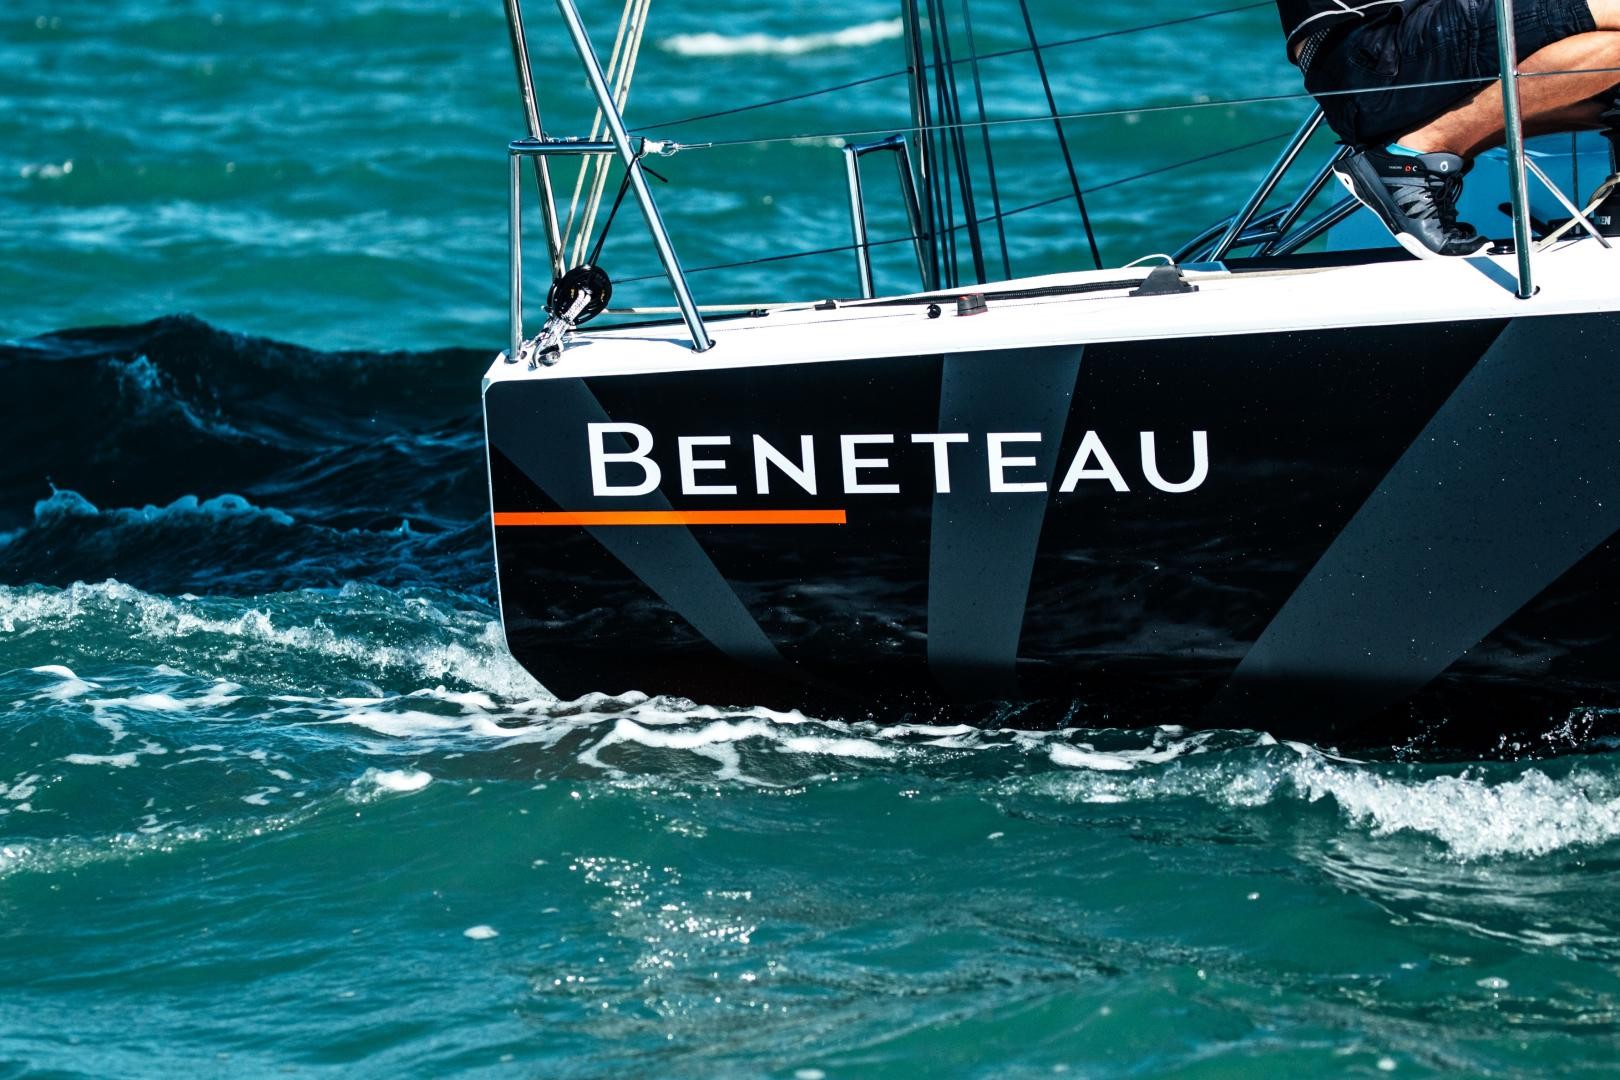 Let's Go Beyond! Groupe Beneteau's strategic plan for 2020-2025